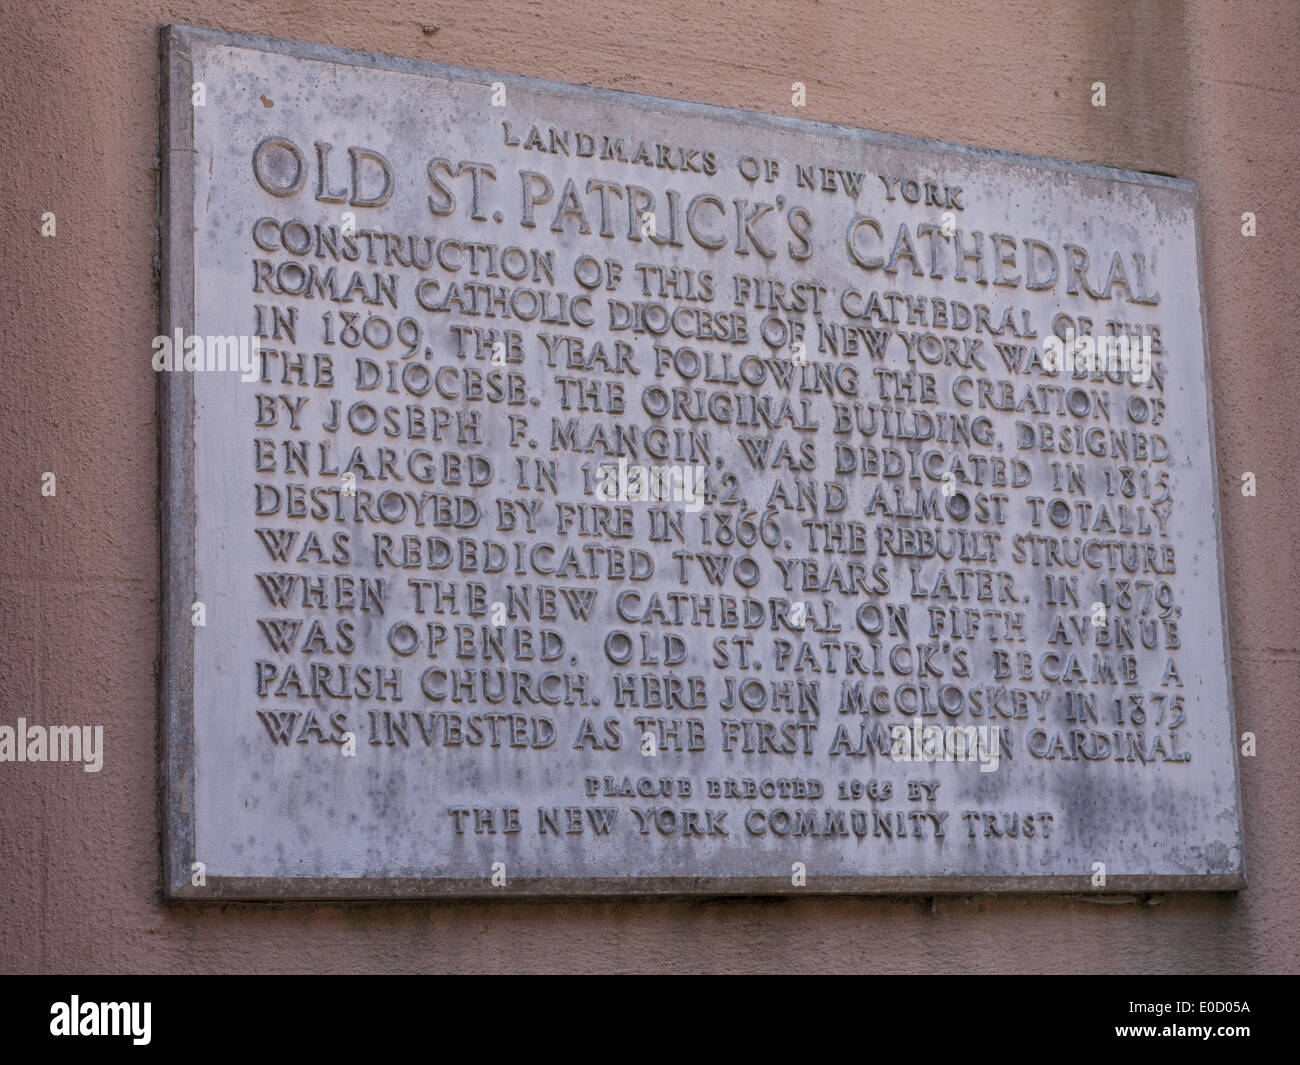 NYC Landmark Plaque, St Patrick's Old Cathedral, Nolita, NYC, USA Stock Photo